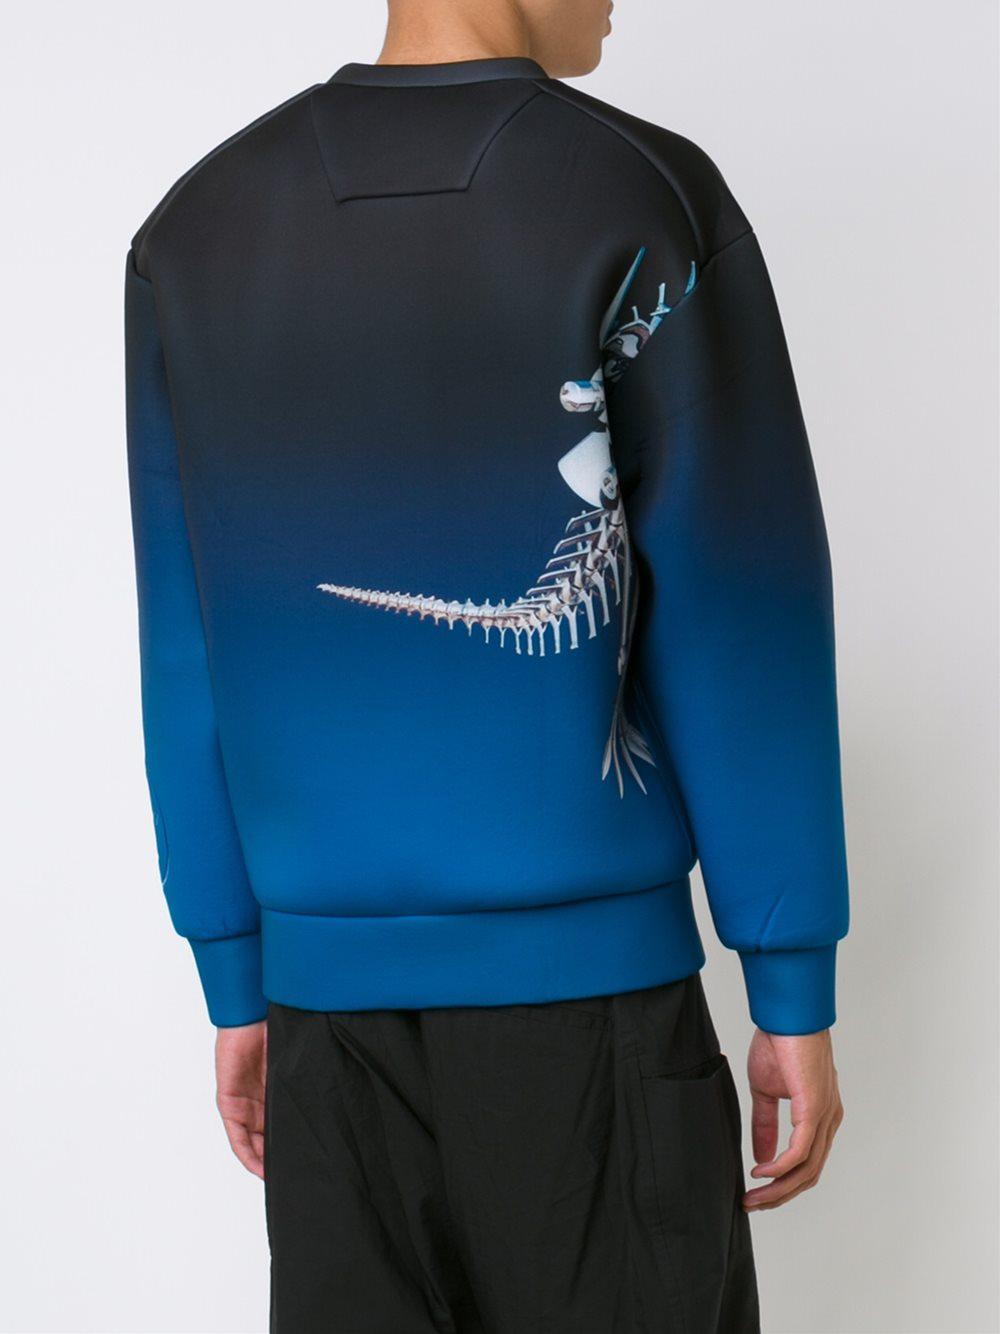 Juun.J X Hajime Sorayama Sweatshirt in Blue for Men - Lyst